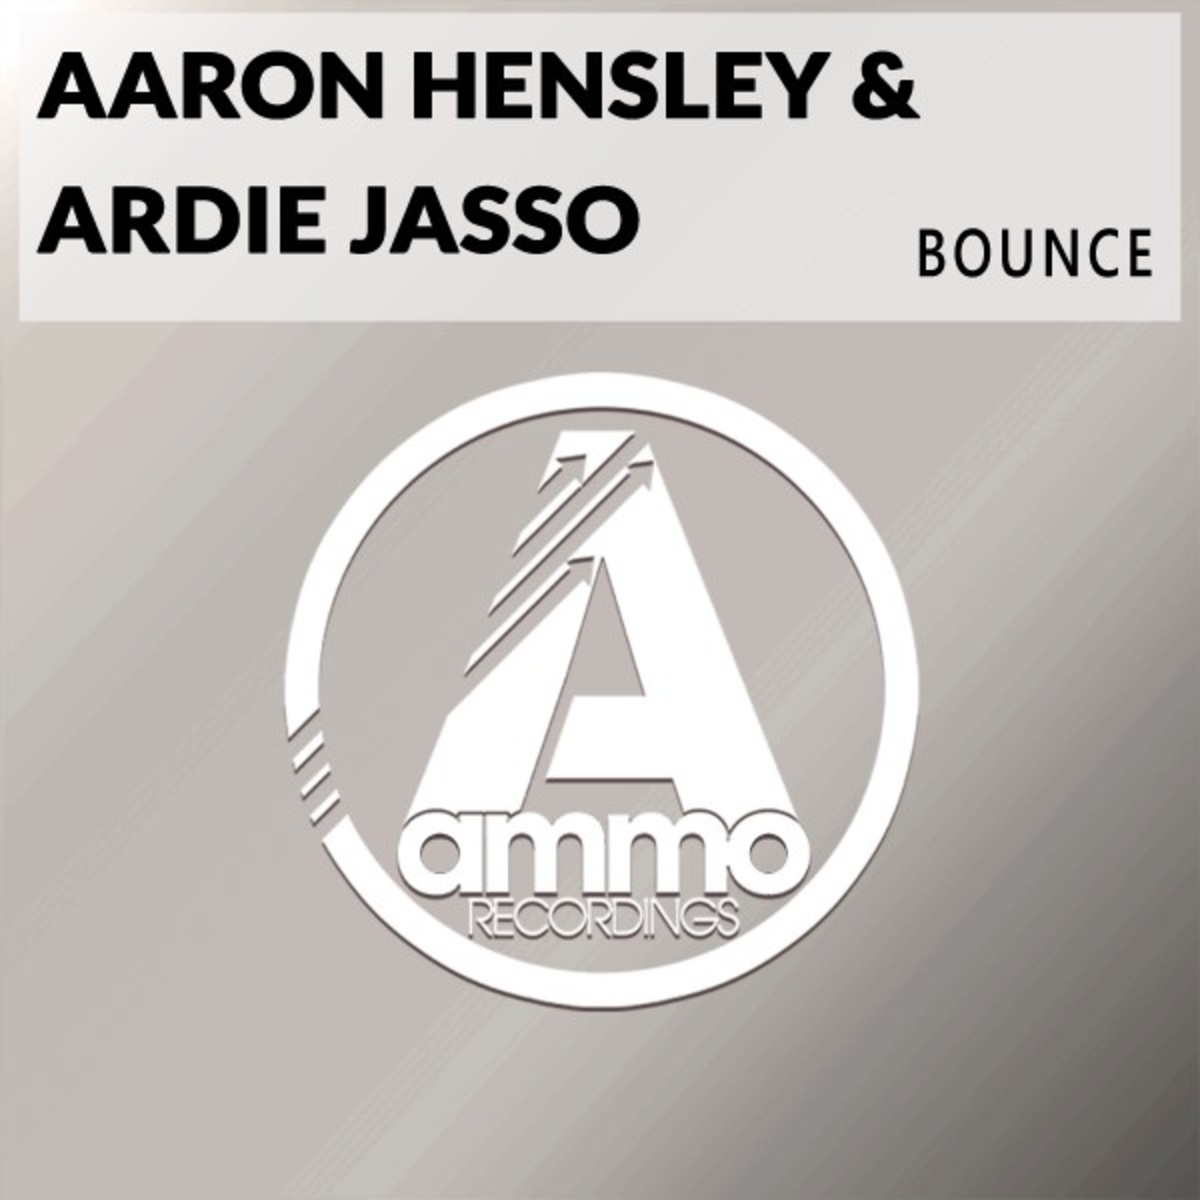 Aaron Hensley & Ardie Jasso - Bounce / Ammo Recordings